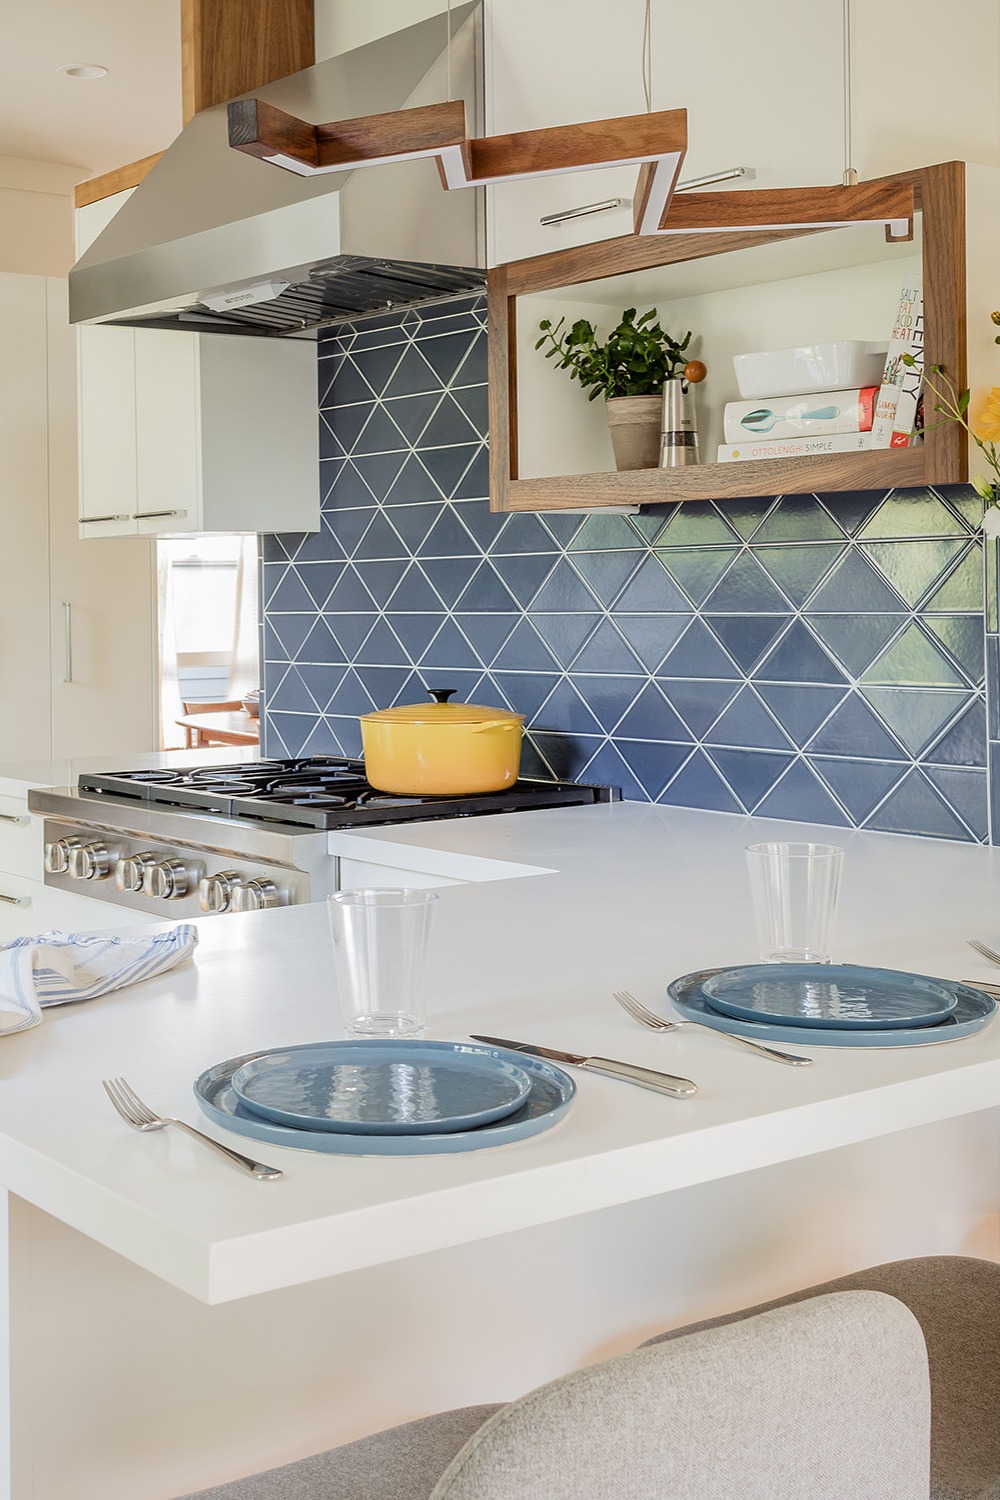 White Kitchen Cabinets Blue Tiles Midcentury Kitchen Different Shades Visual Interest Perfect Match Backsplashes